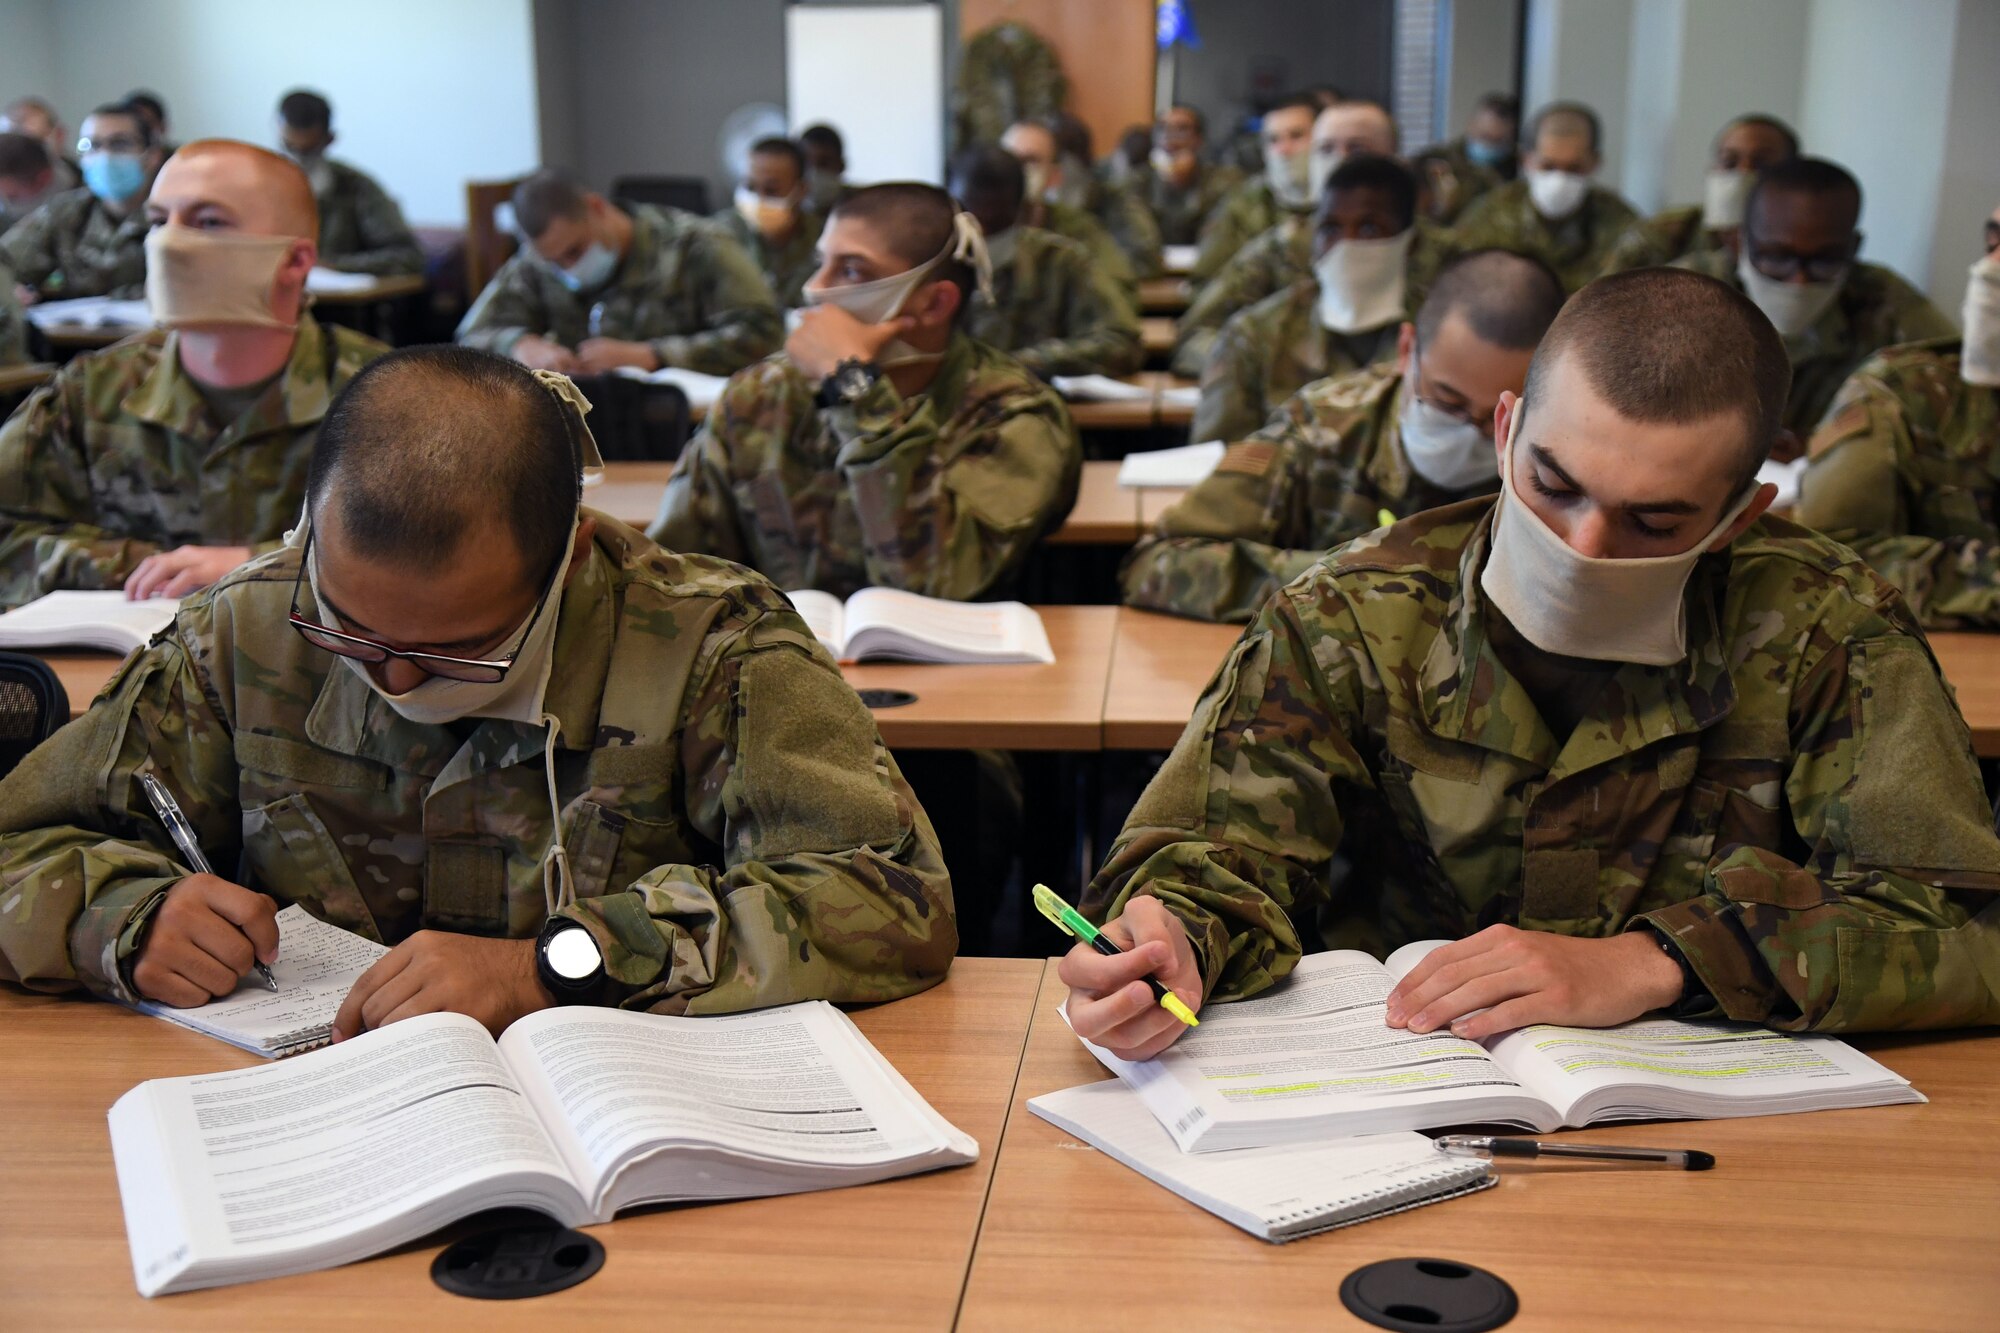 Airmen wearing masks sit in class